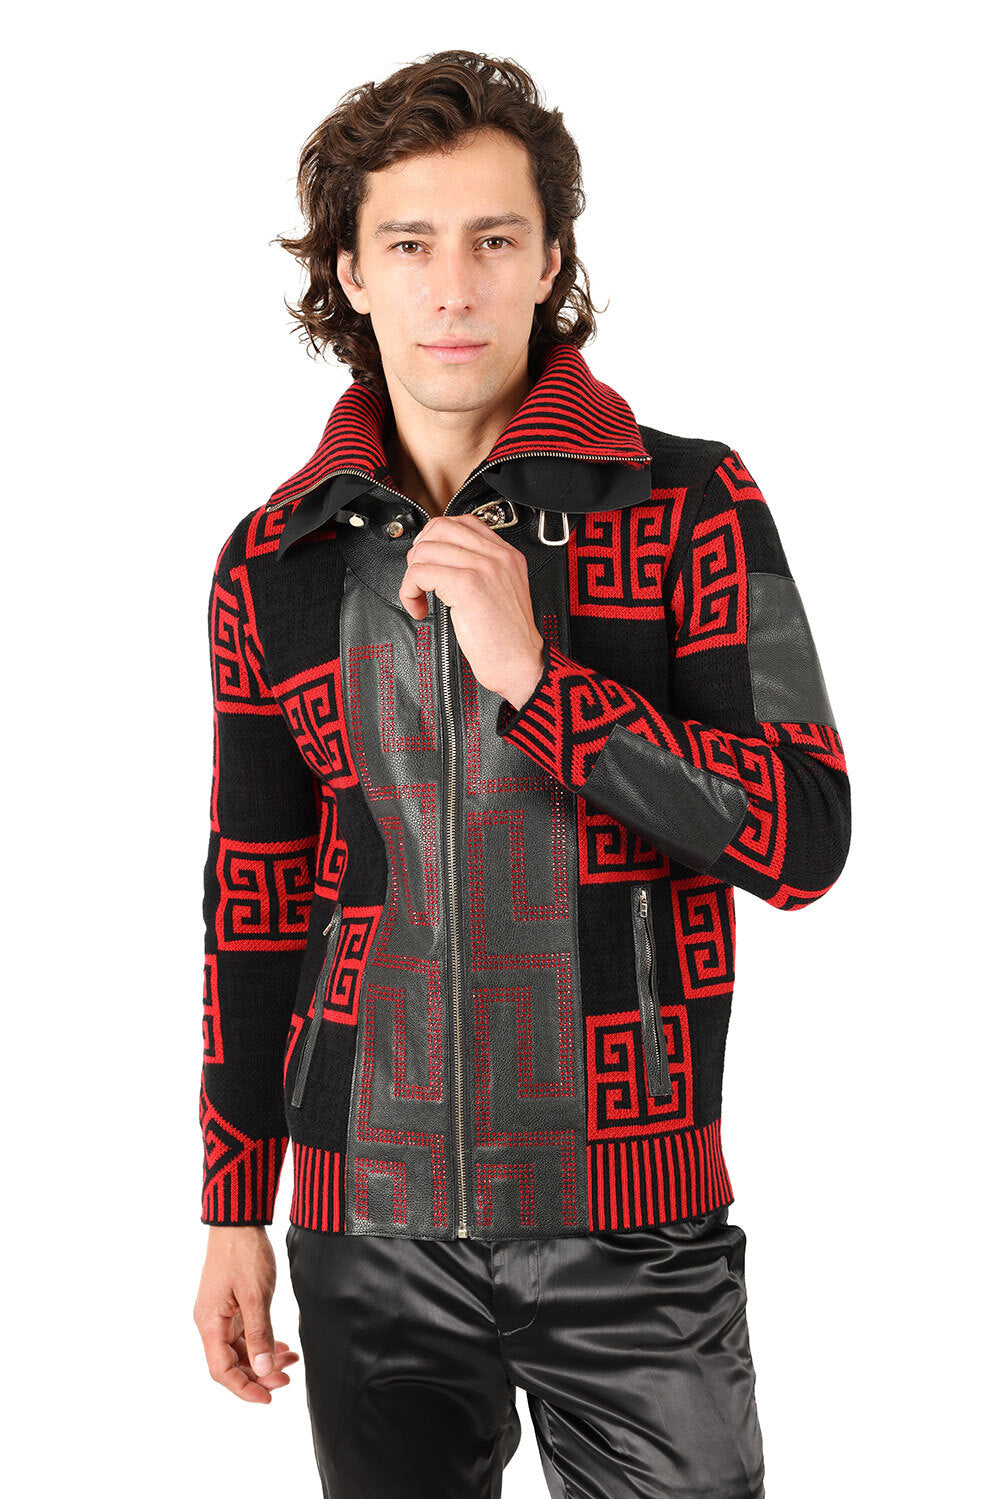 Barabas Men's Greek Key Print Rhinestone Leather Winter Jacket 2SWZ2 Red Black